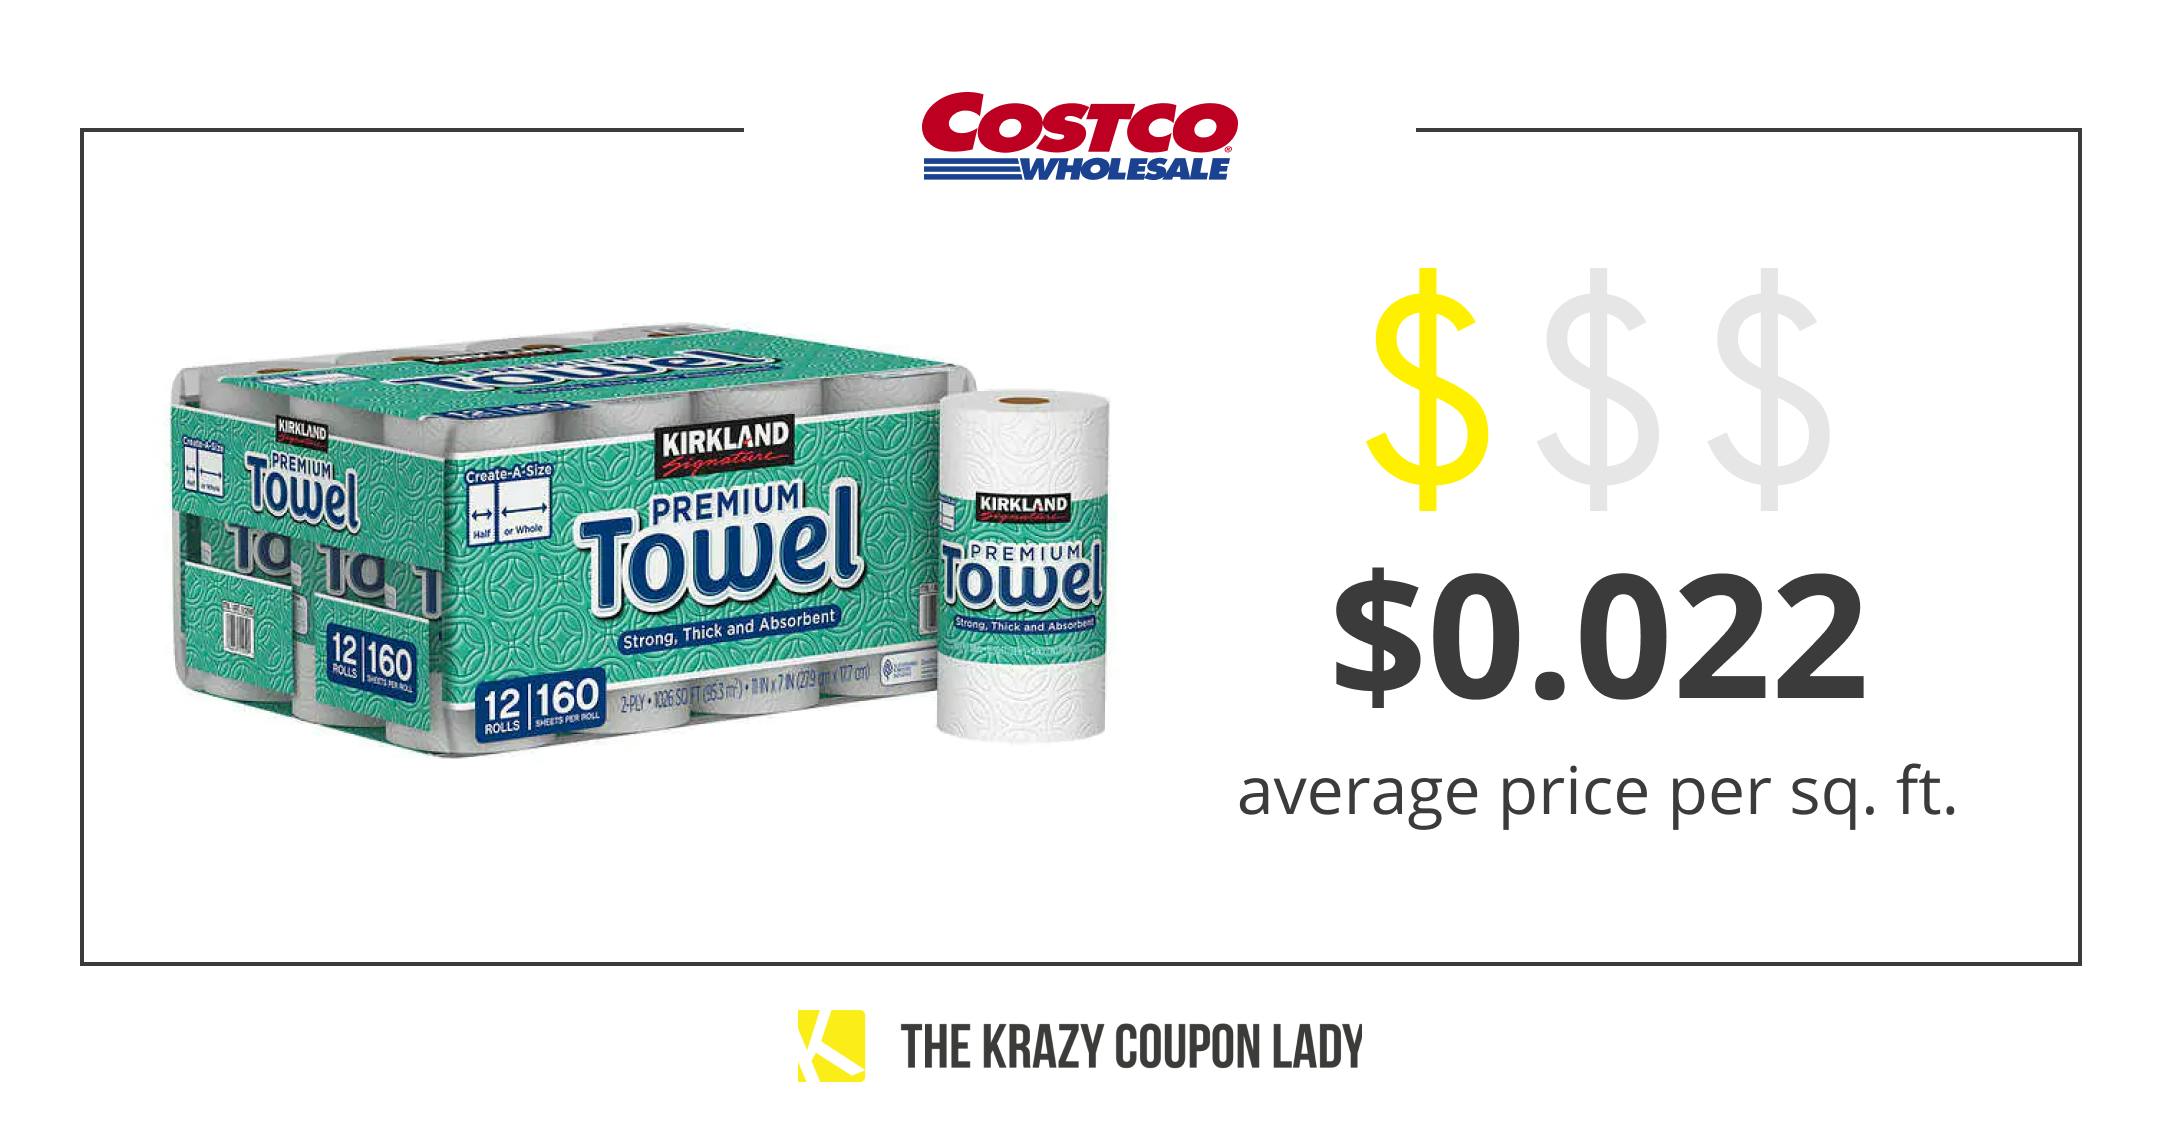 costco kirkland paper towels average price per square foot graphic